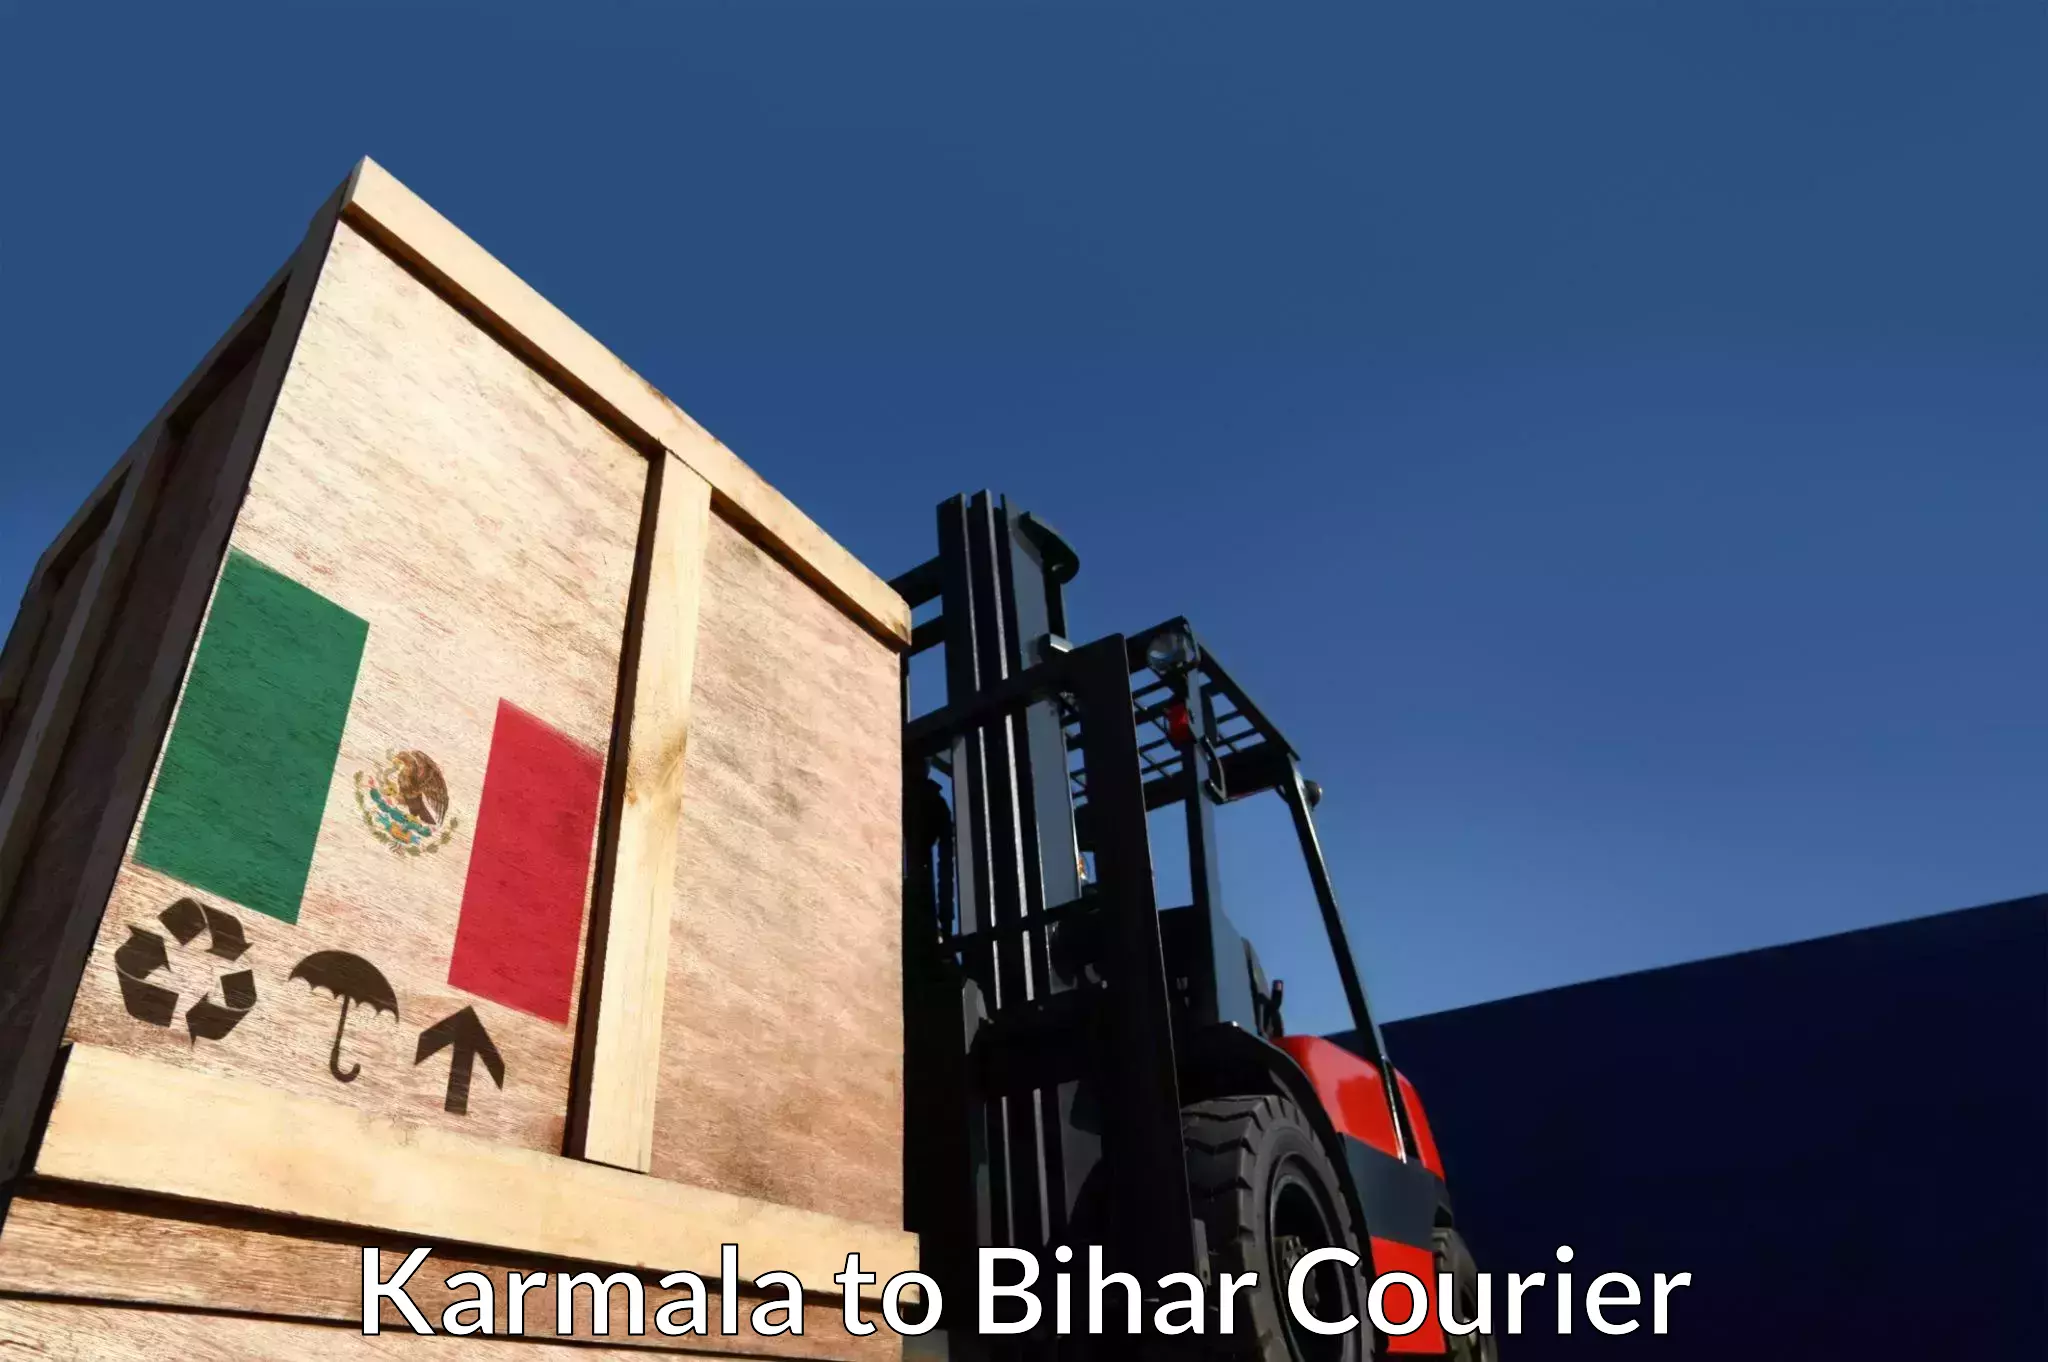 Courier service comparison Karmala to Bhagalpur